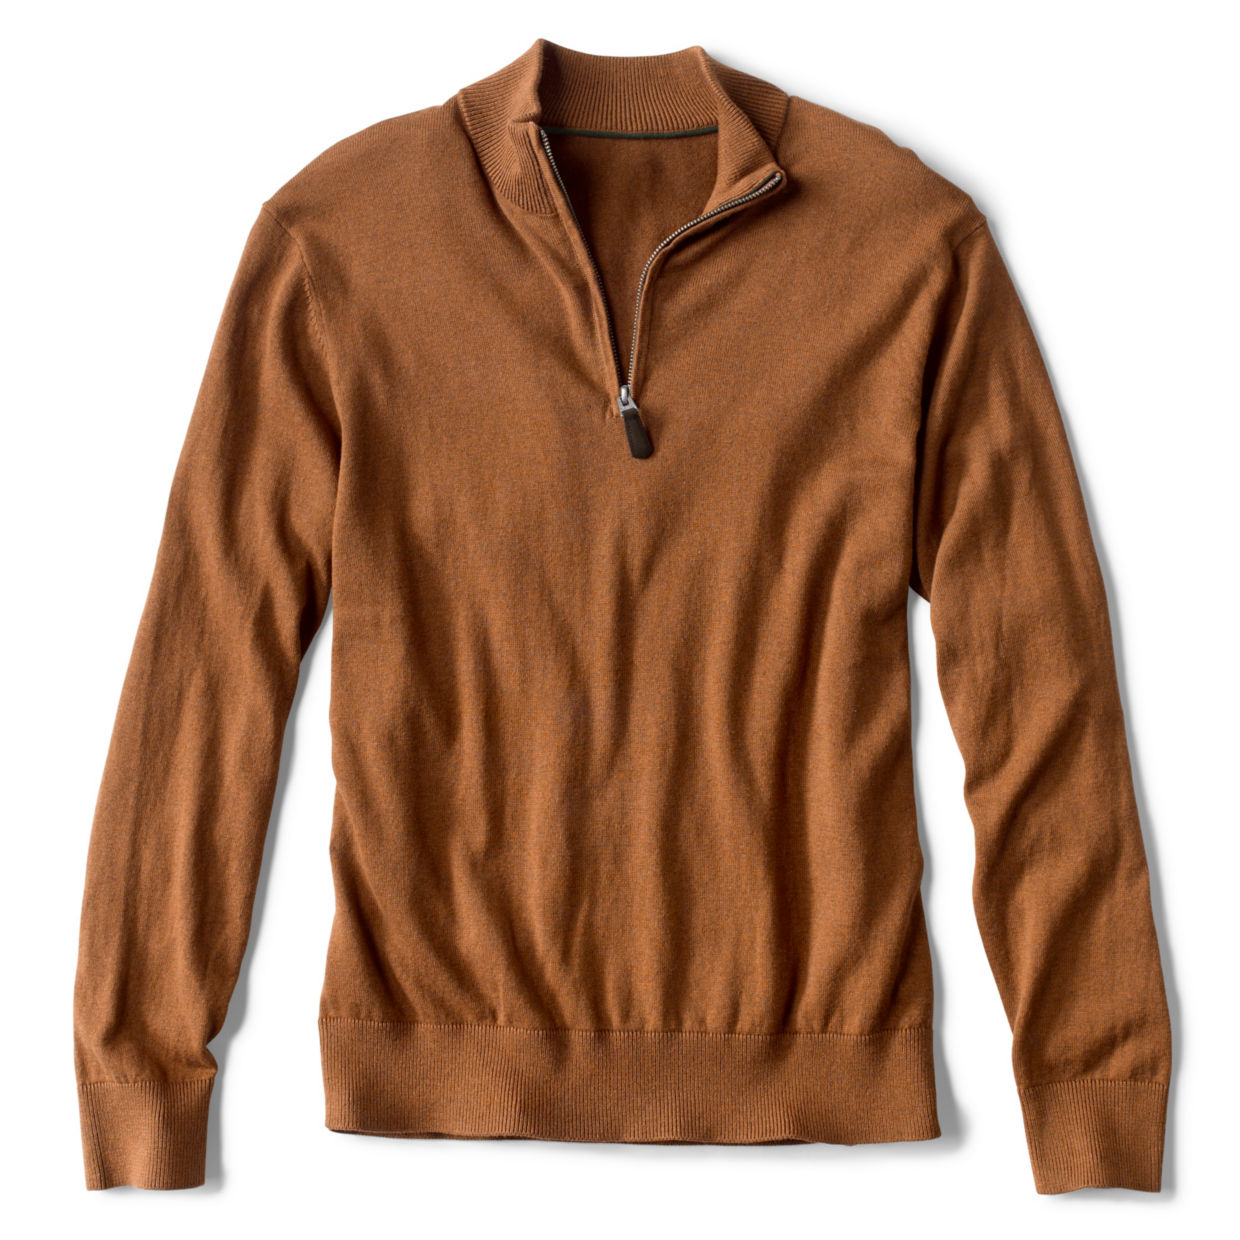 Cotton/Silk/Cashmere Zipneck Sweater